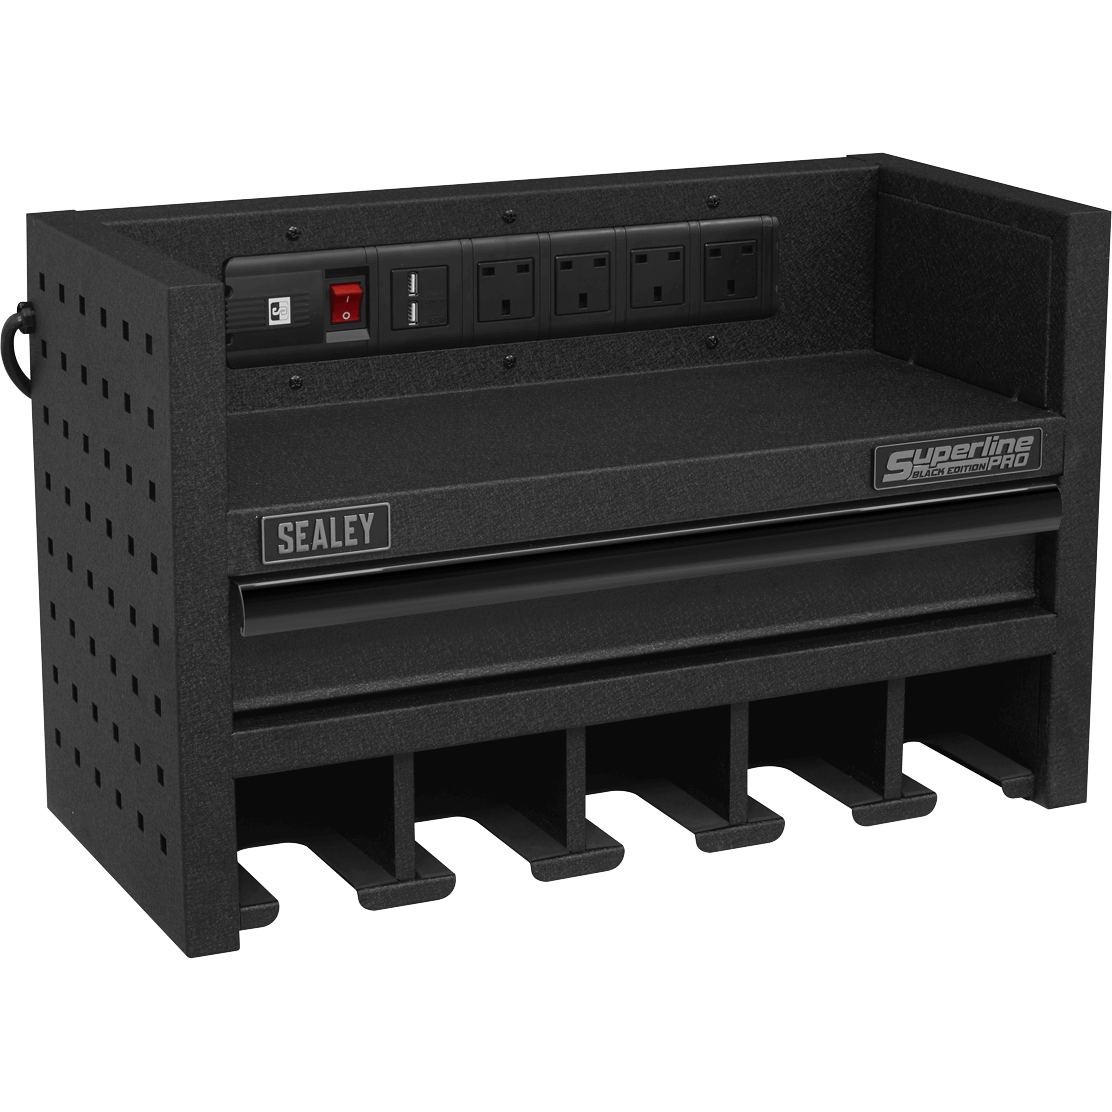 Sealey Superline Pro Power Tool Storage and Power Strip Unit Black